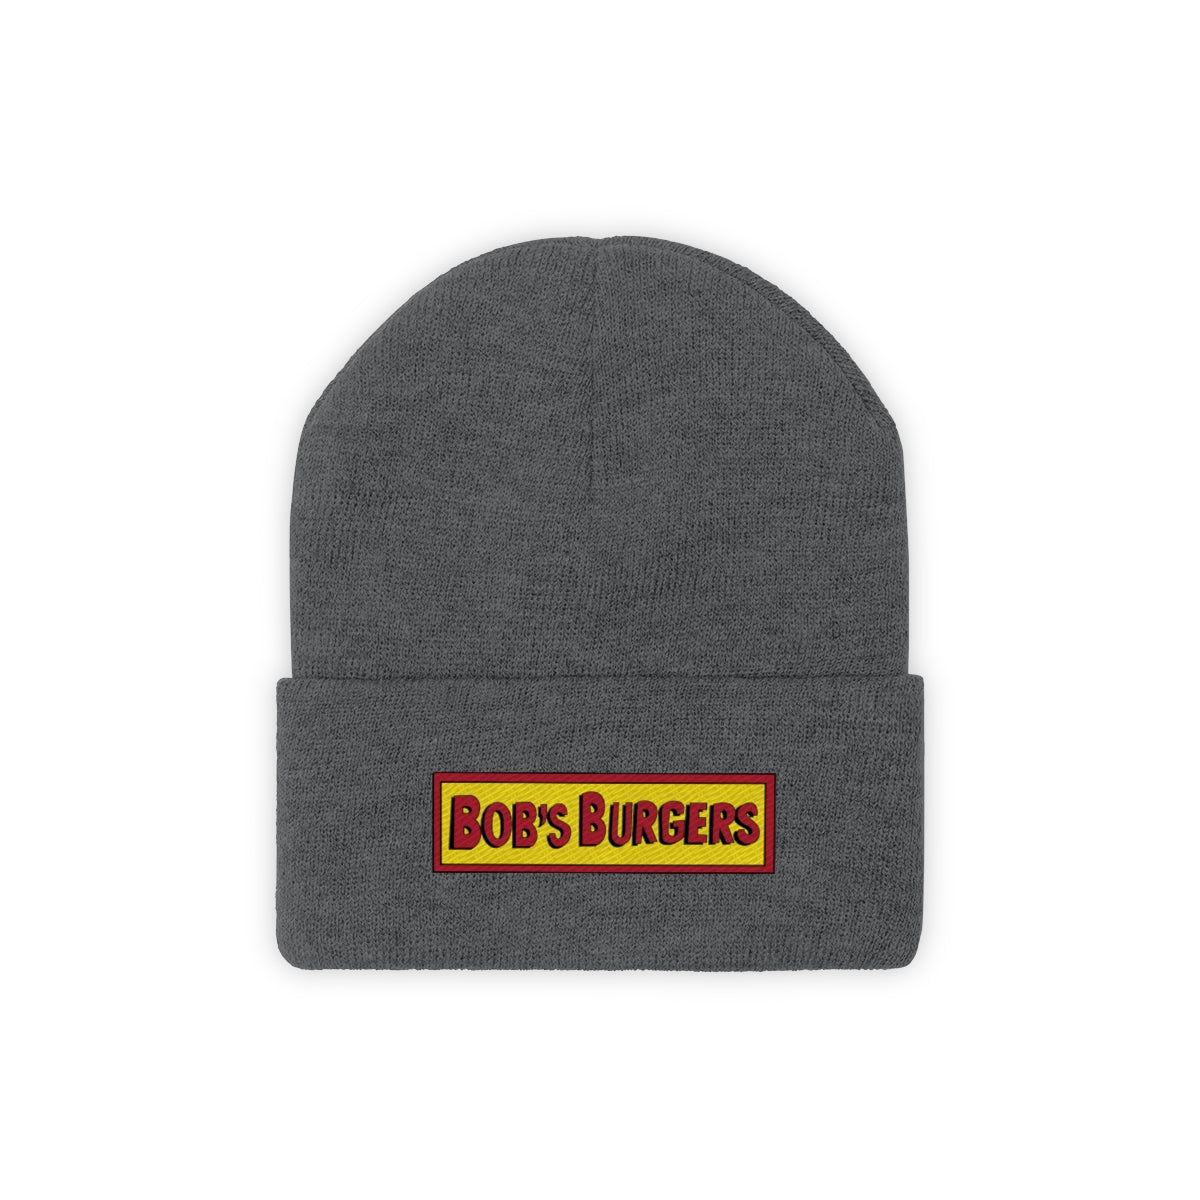 Bob's Burgers Embroidered Beanie - Just Like Bob Bob's Burgers